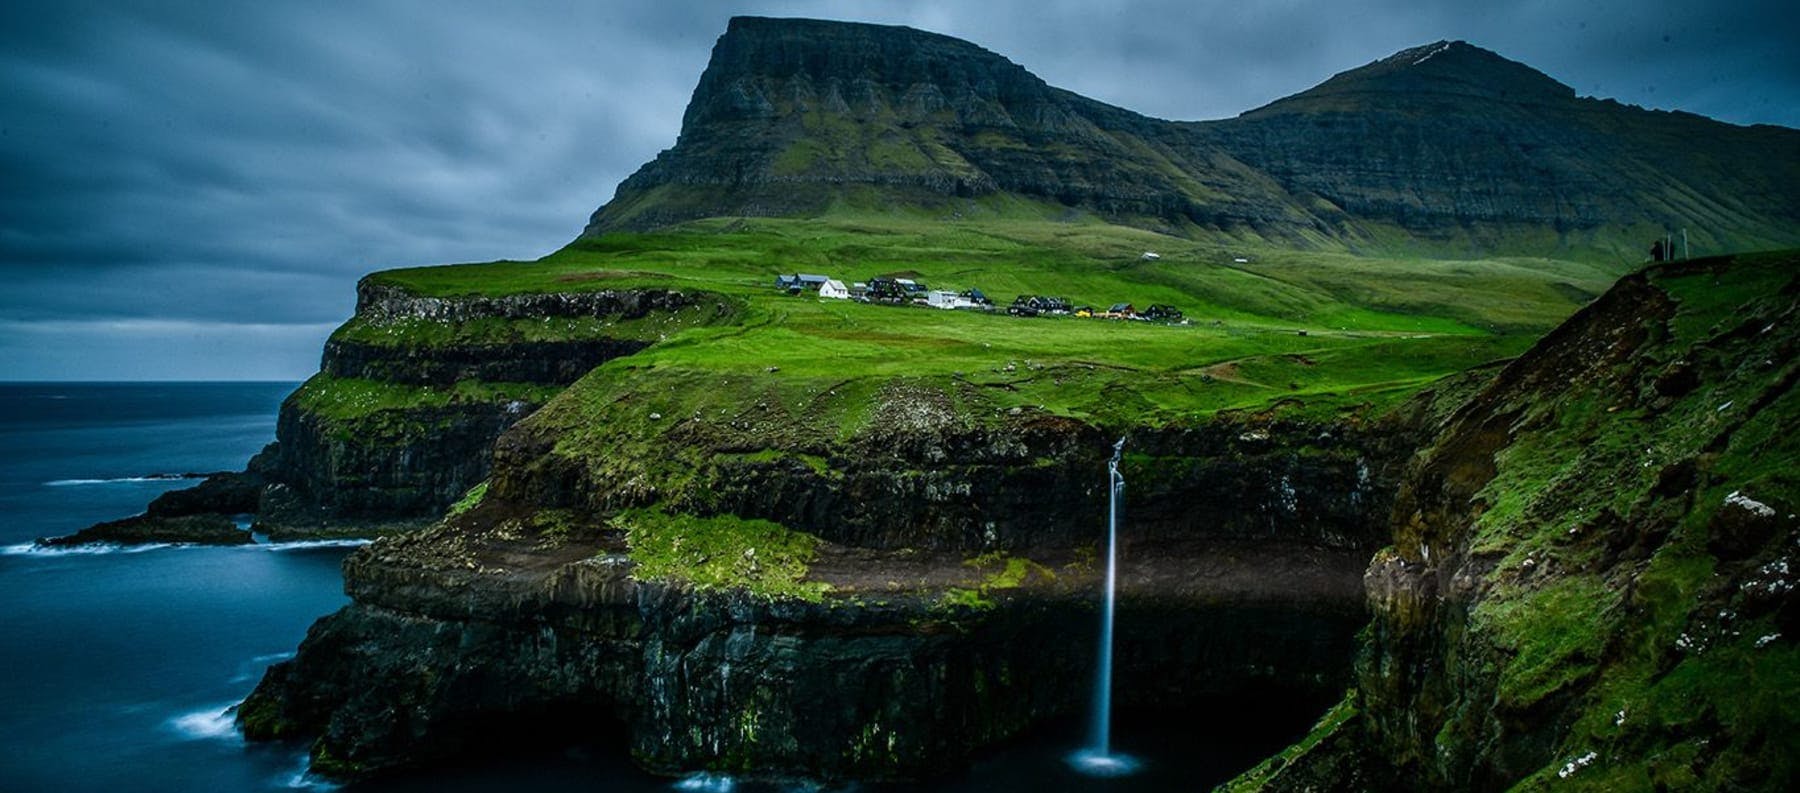 Gasadalur in the Faroe Islands